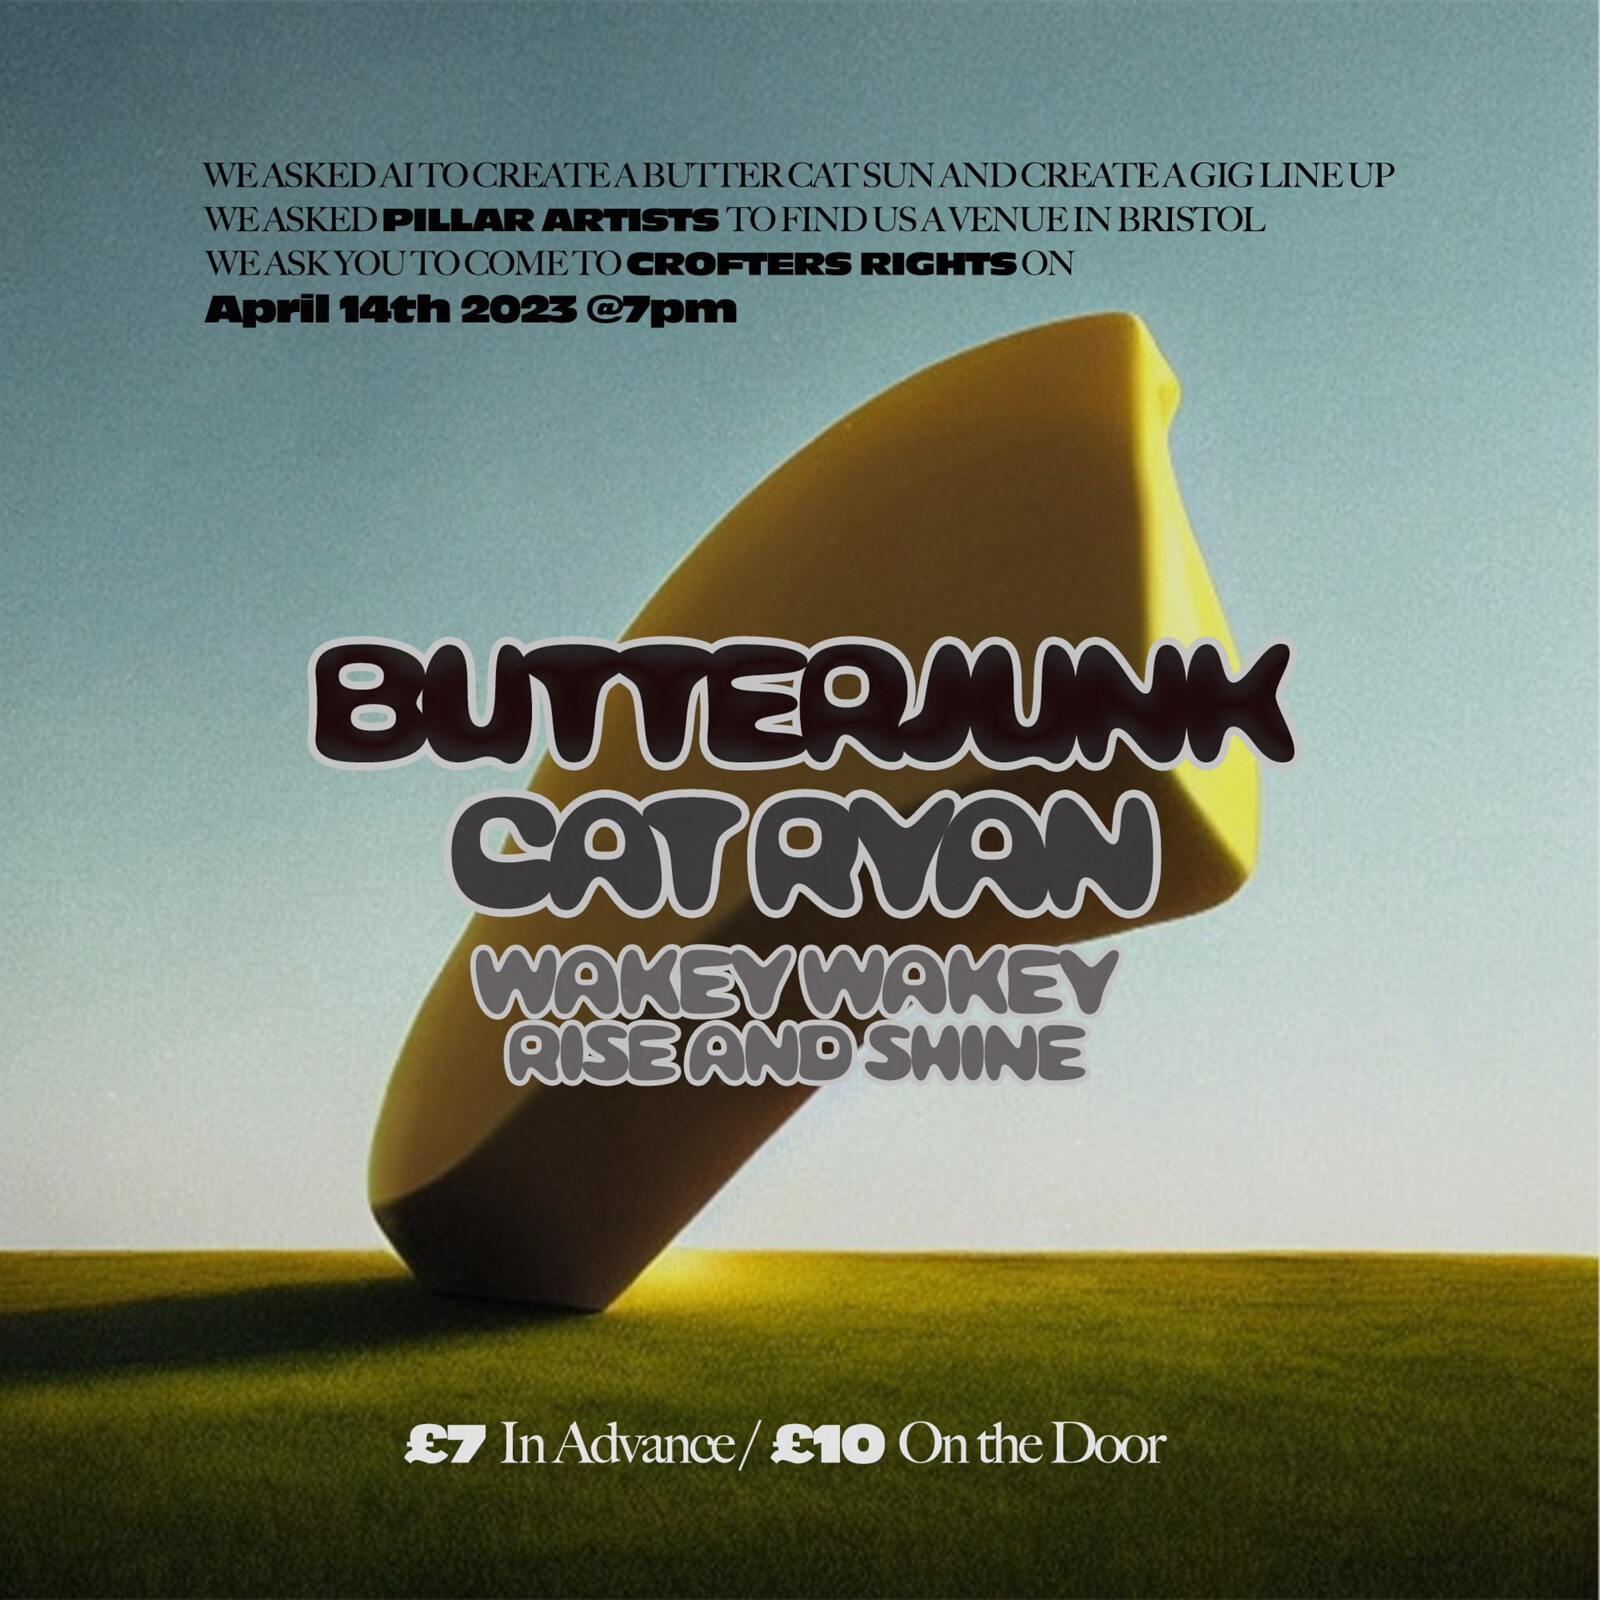 Butterjunk / Cat Ryan / Wakey Wakey Rise & Shine at Crofters Rights